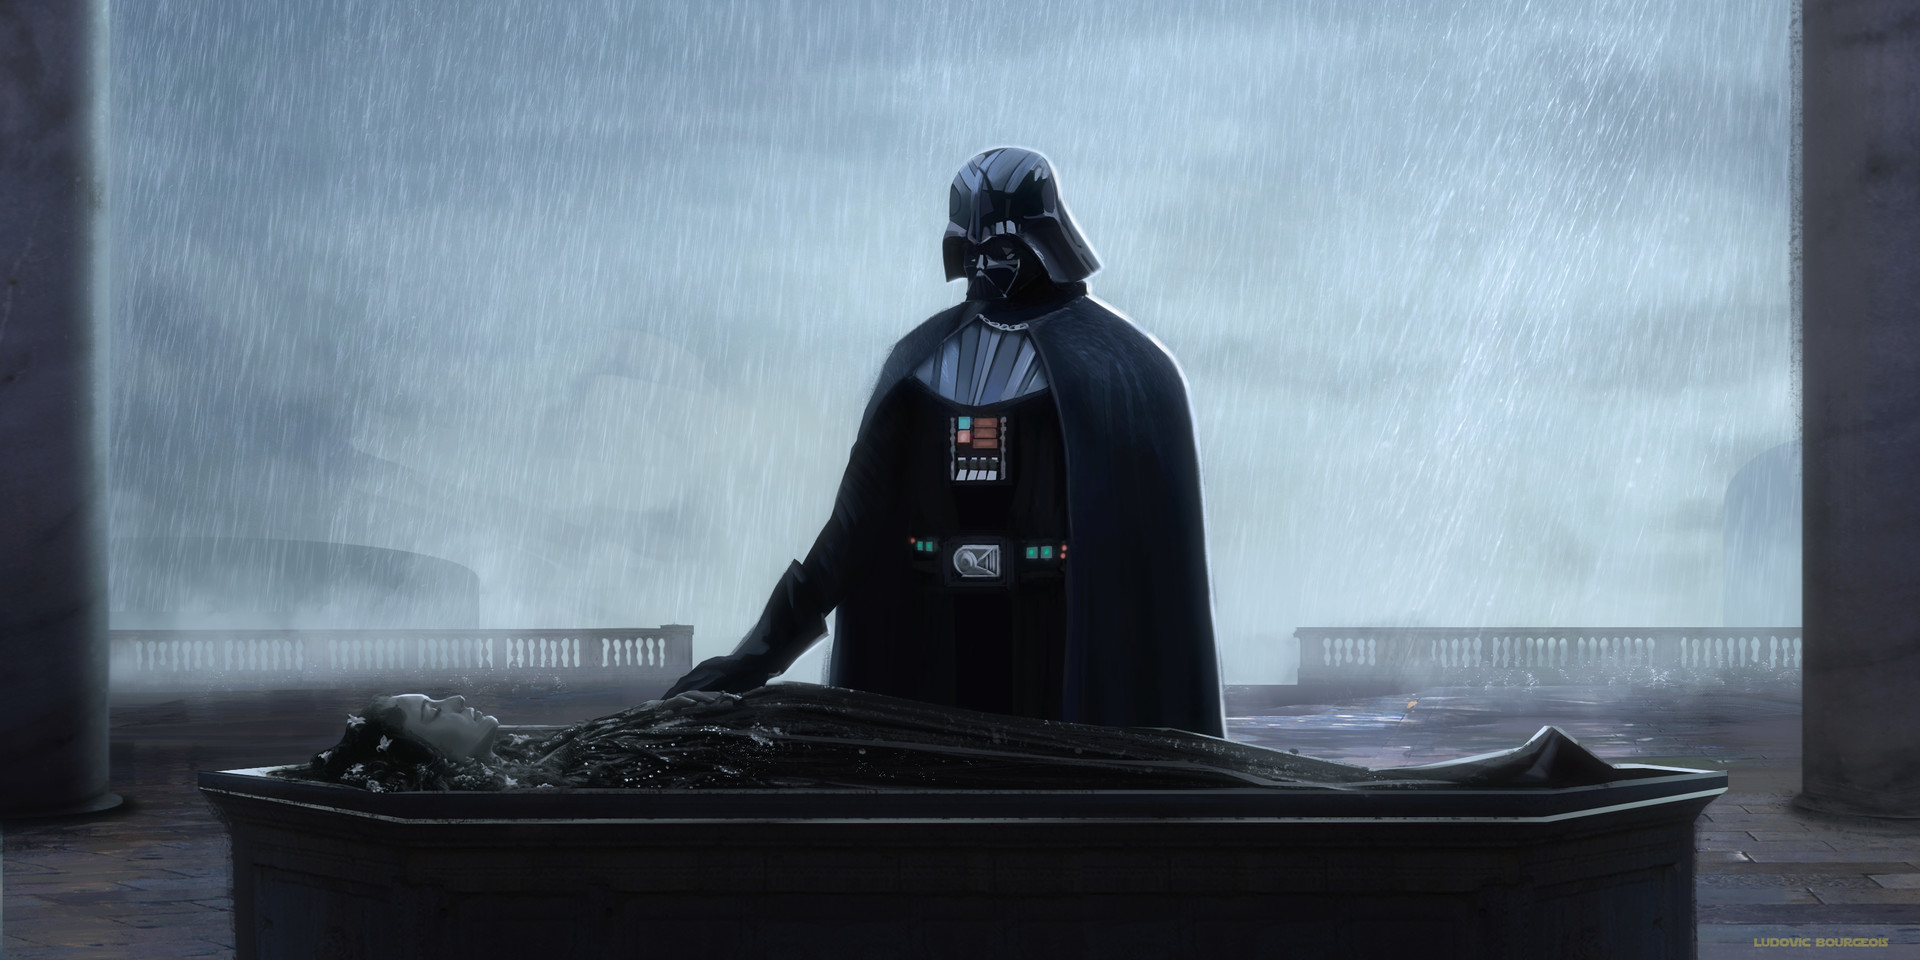 General 1920x960 Star Wars Padme Amidala Anakin Skywalker Darth Vader sad sadness rain artwork digital art Naboo landscape Star Wars: Episode III - The Revenge of the Sith dead AI art